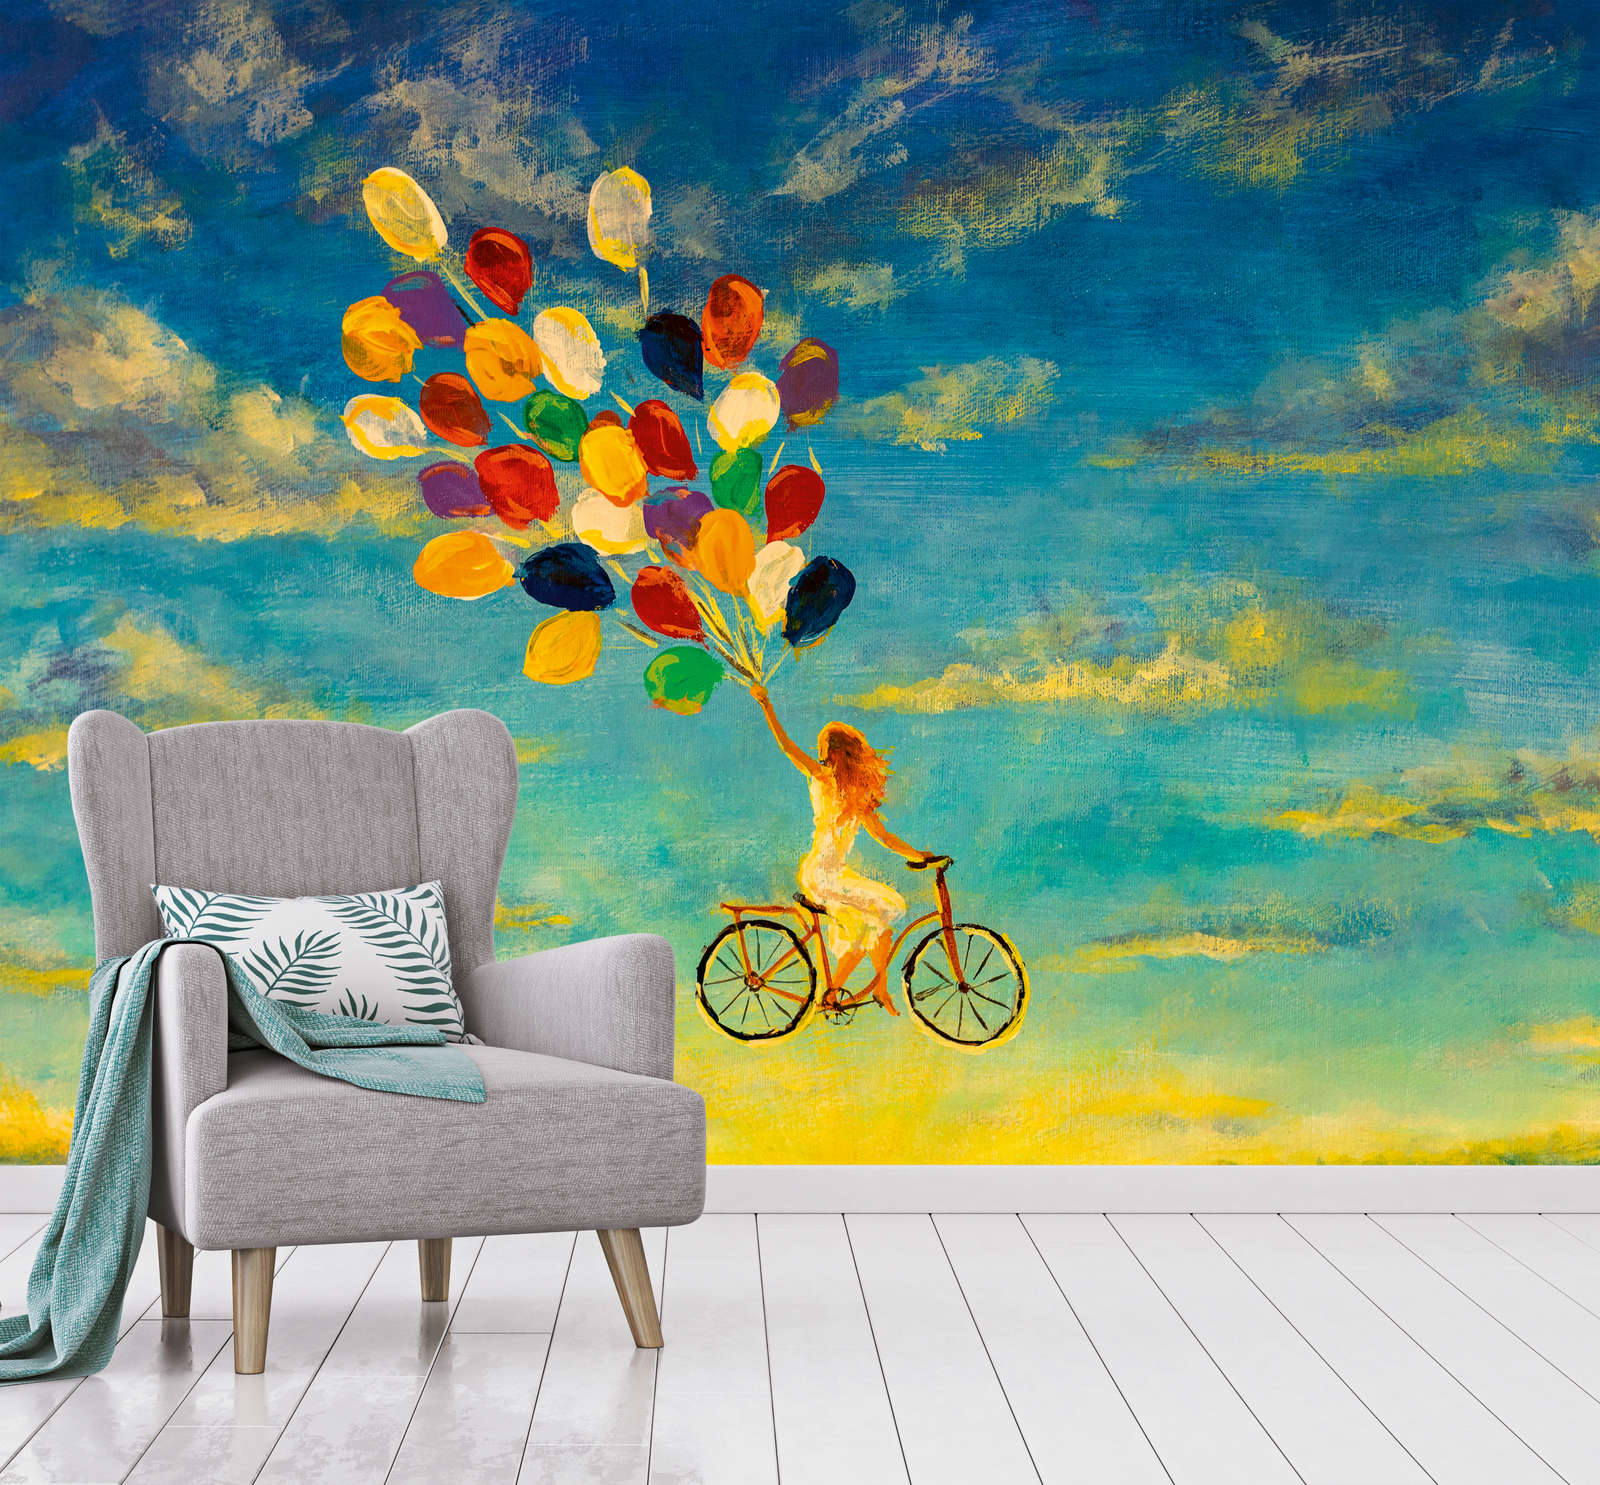             Fototapete mit Frau auf Fahrrad im Himmel Gemälde – Blau, Gelb, Bunt
        